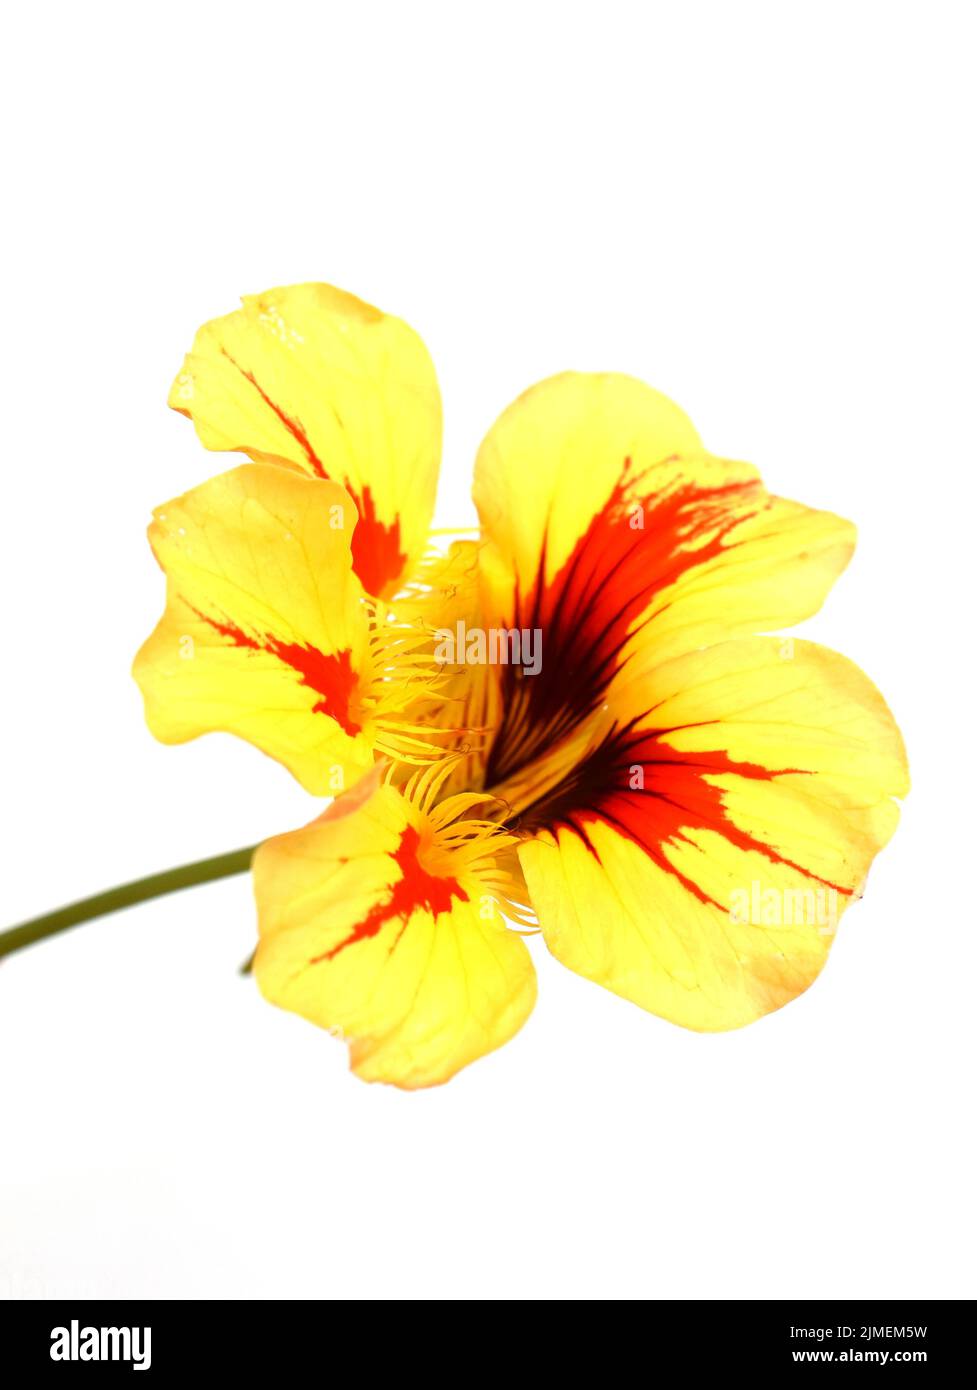 Red and yellow flower of the garden nasturtium Tropaeolum majus isolated on white background Stock Photo